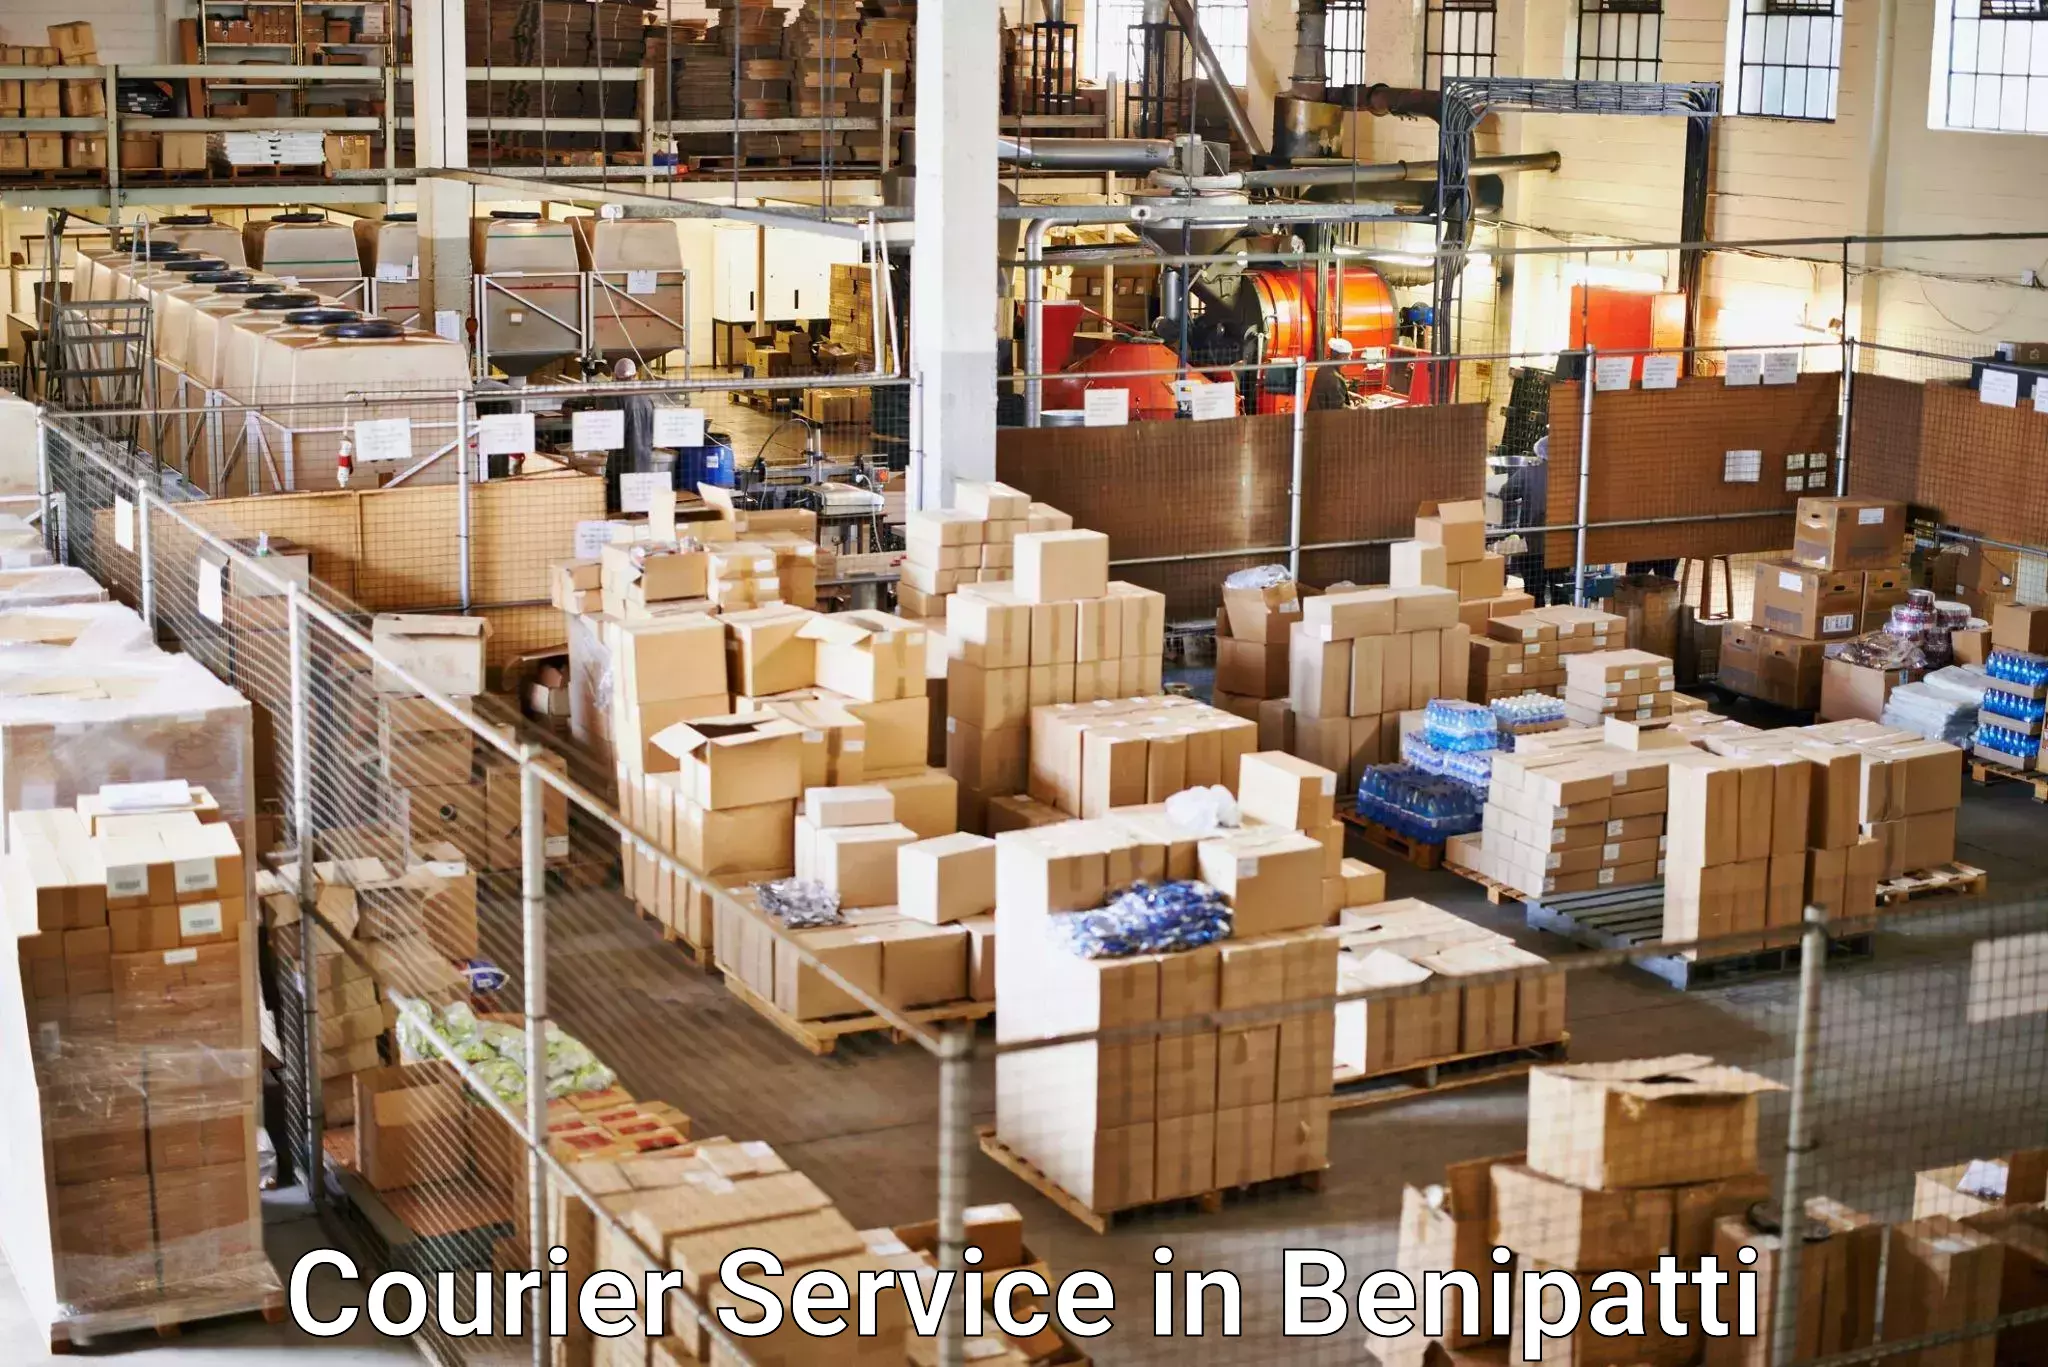 Reliable parcel services in Benipatti